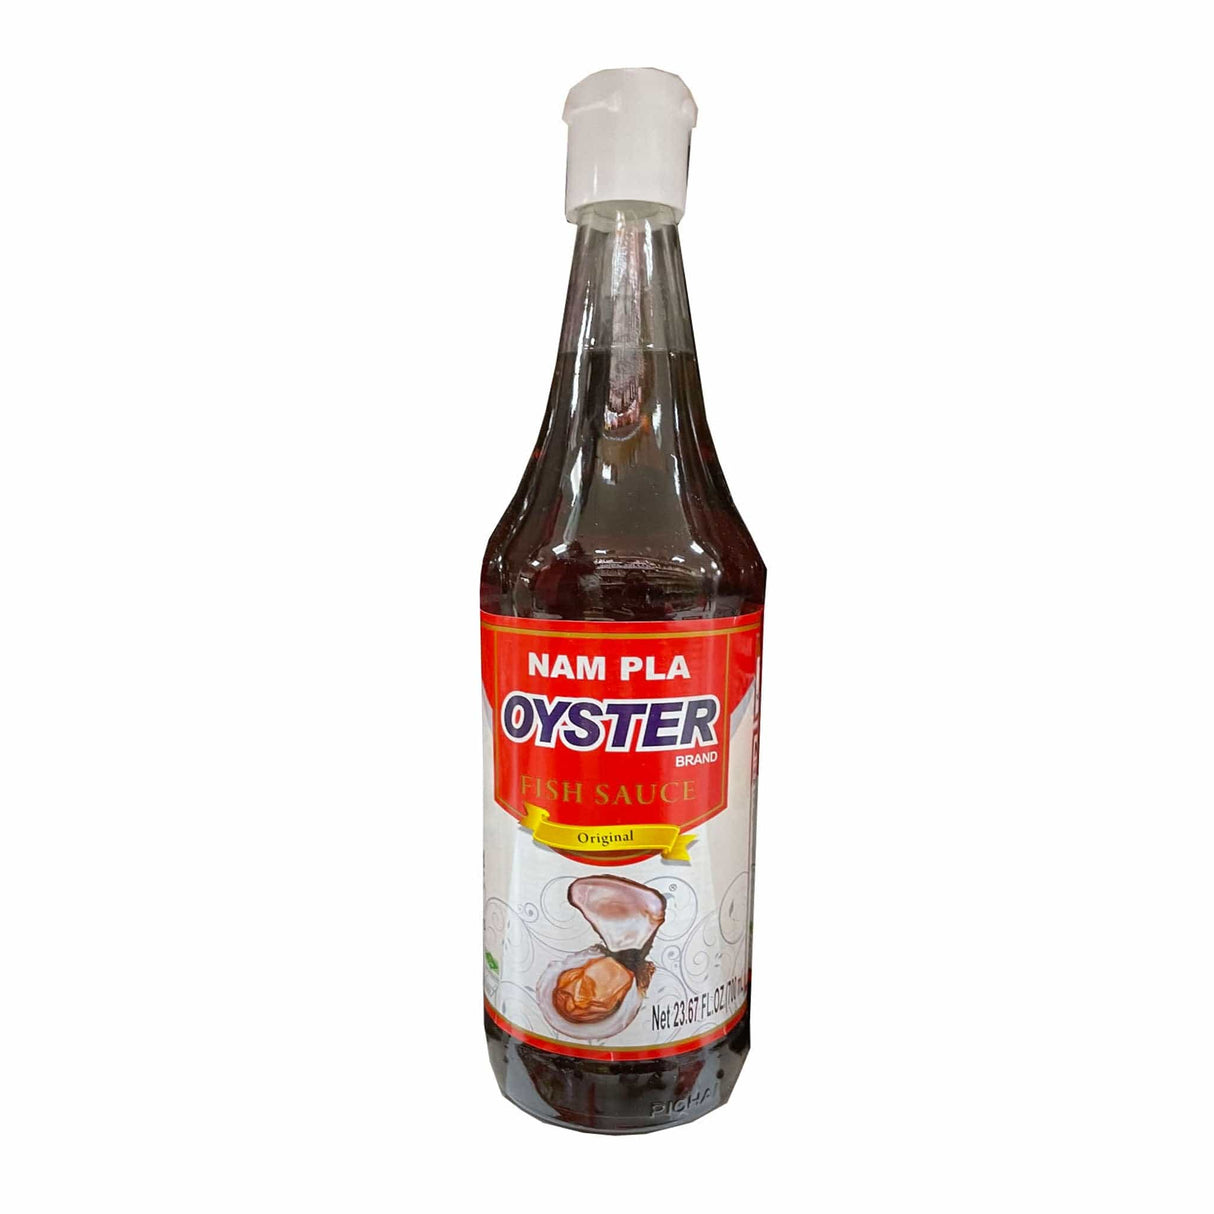 Oyster Brand Fish Sauce Original